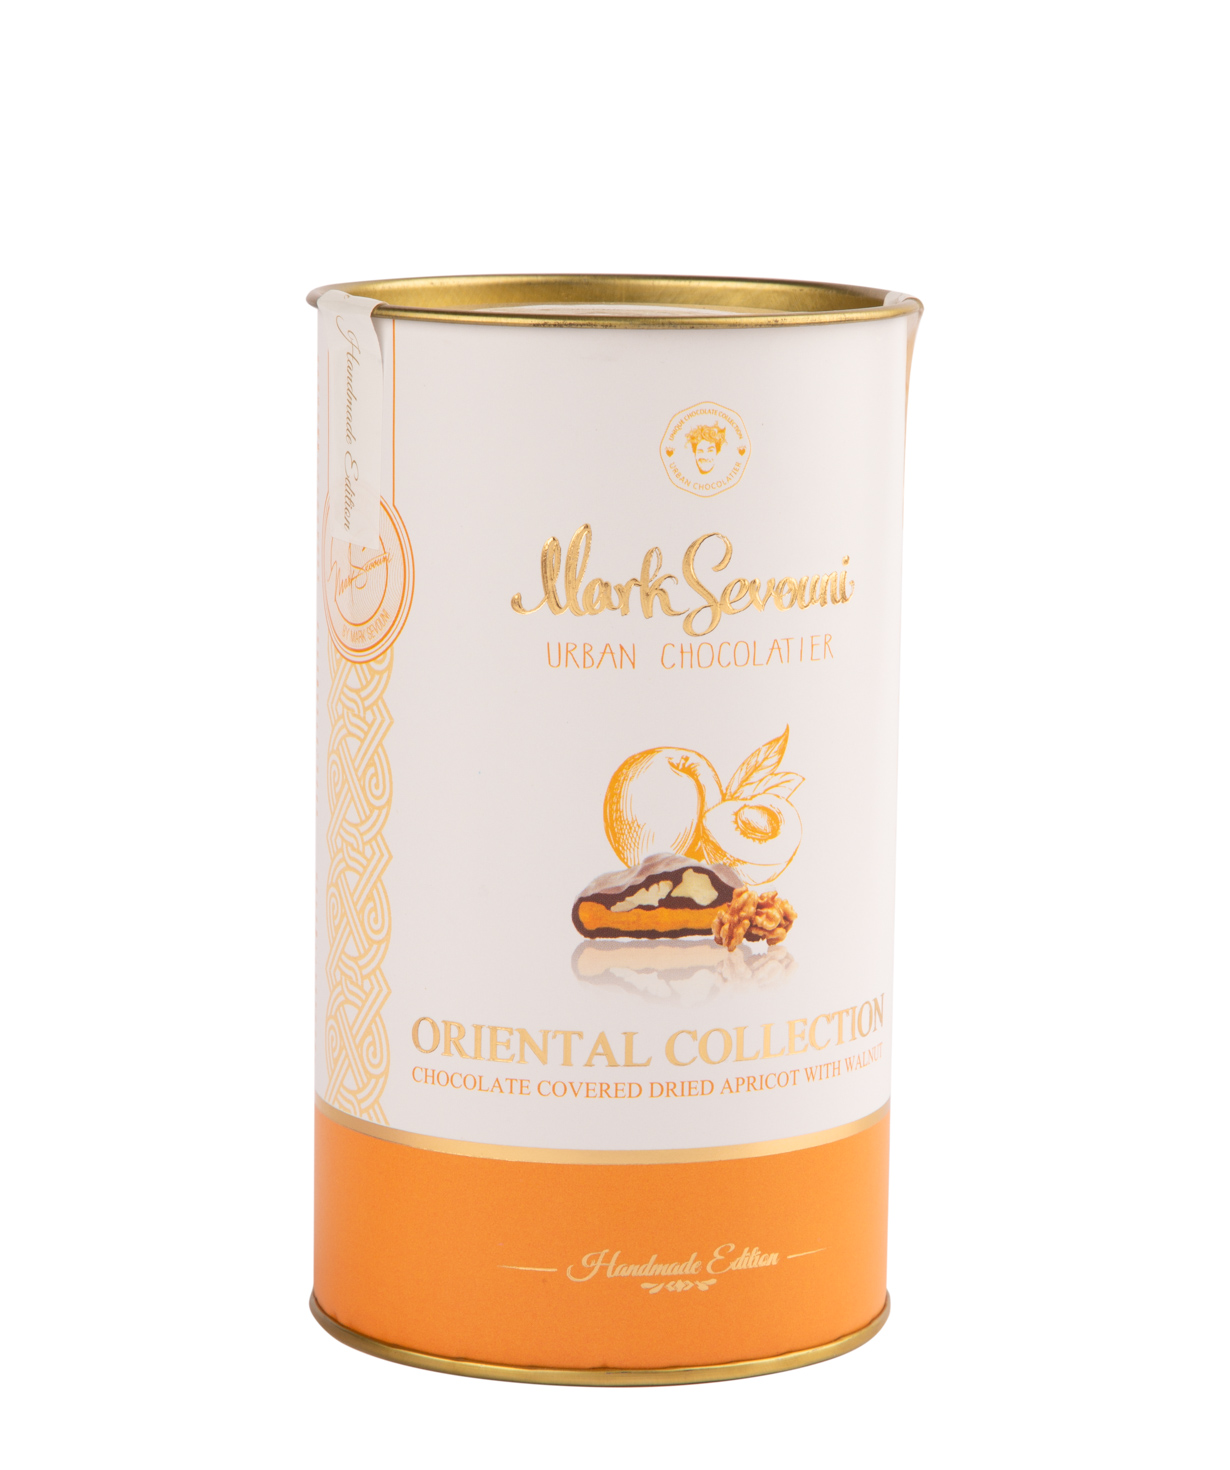 Сушеные абрикосы `Mark Sevouni` шоколадные Oriental Chocolate Collection